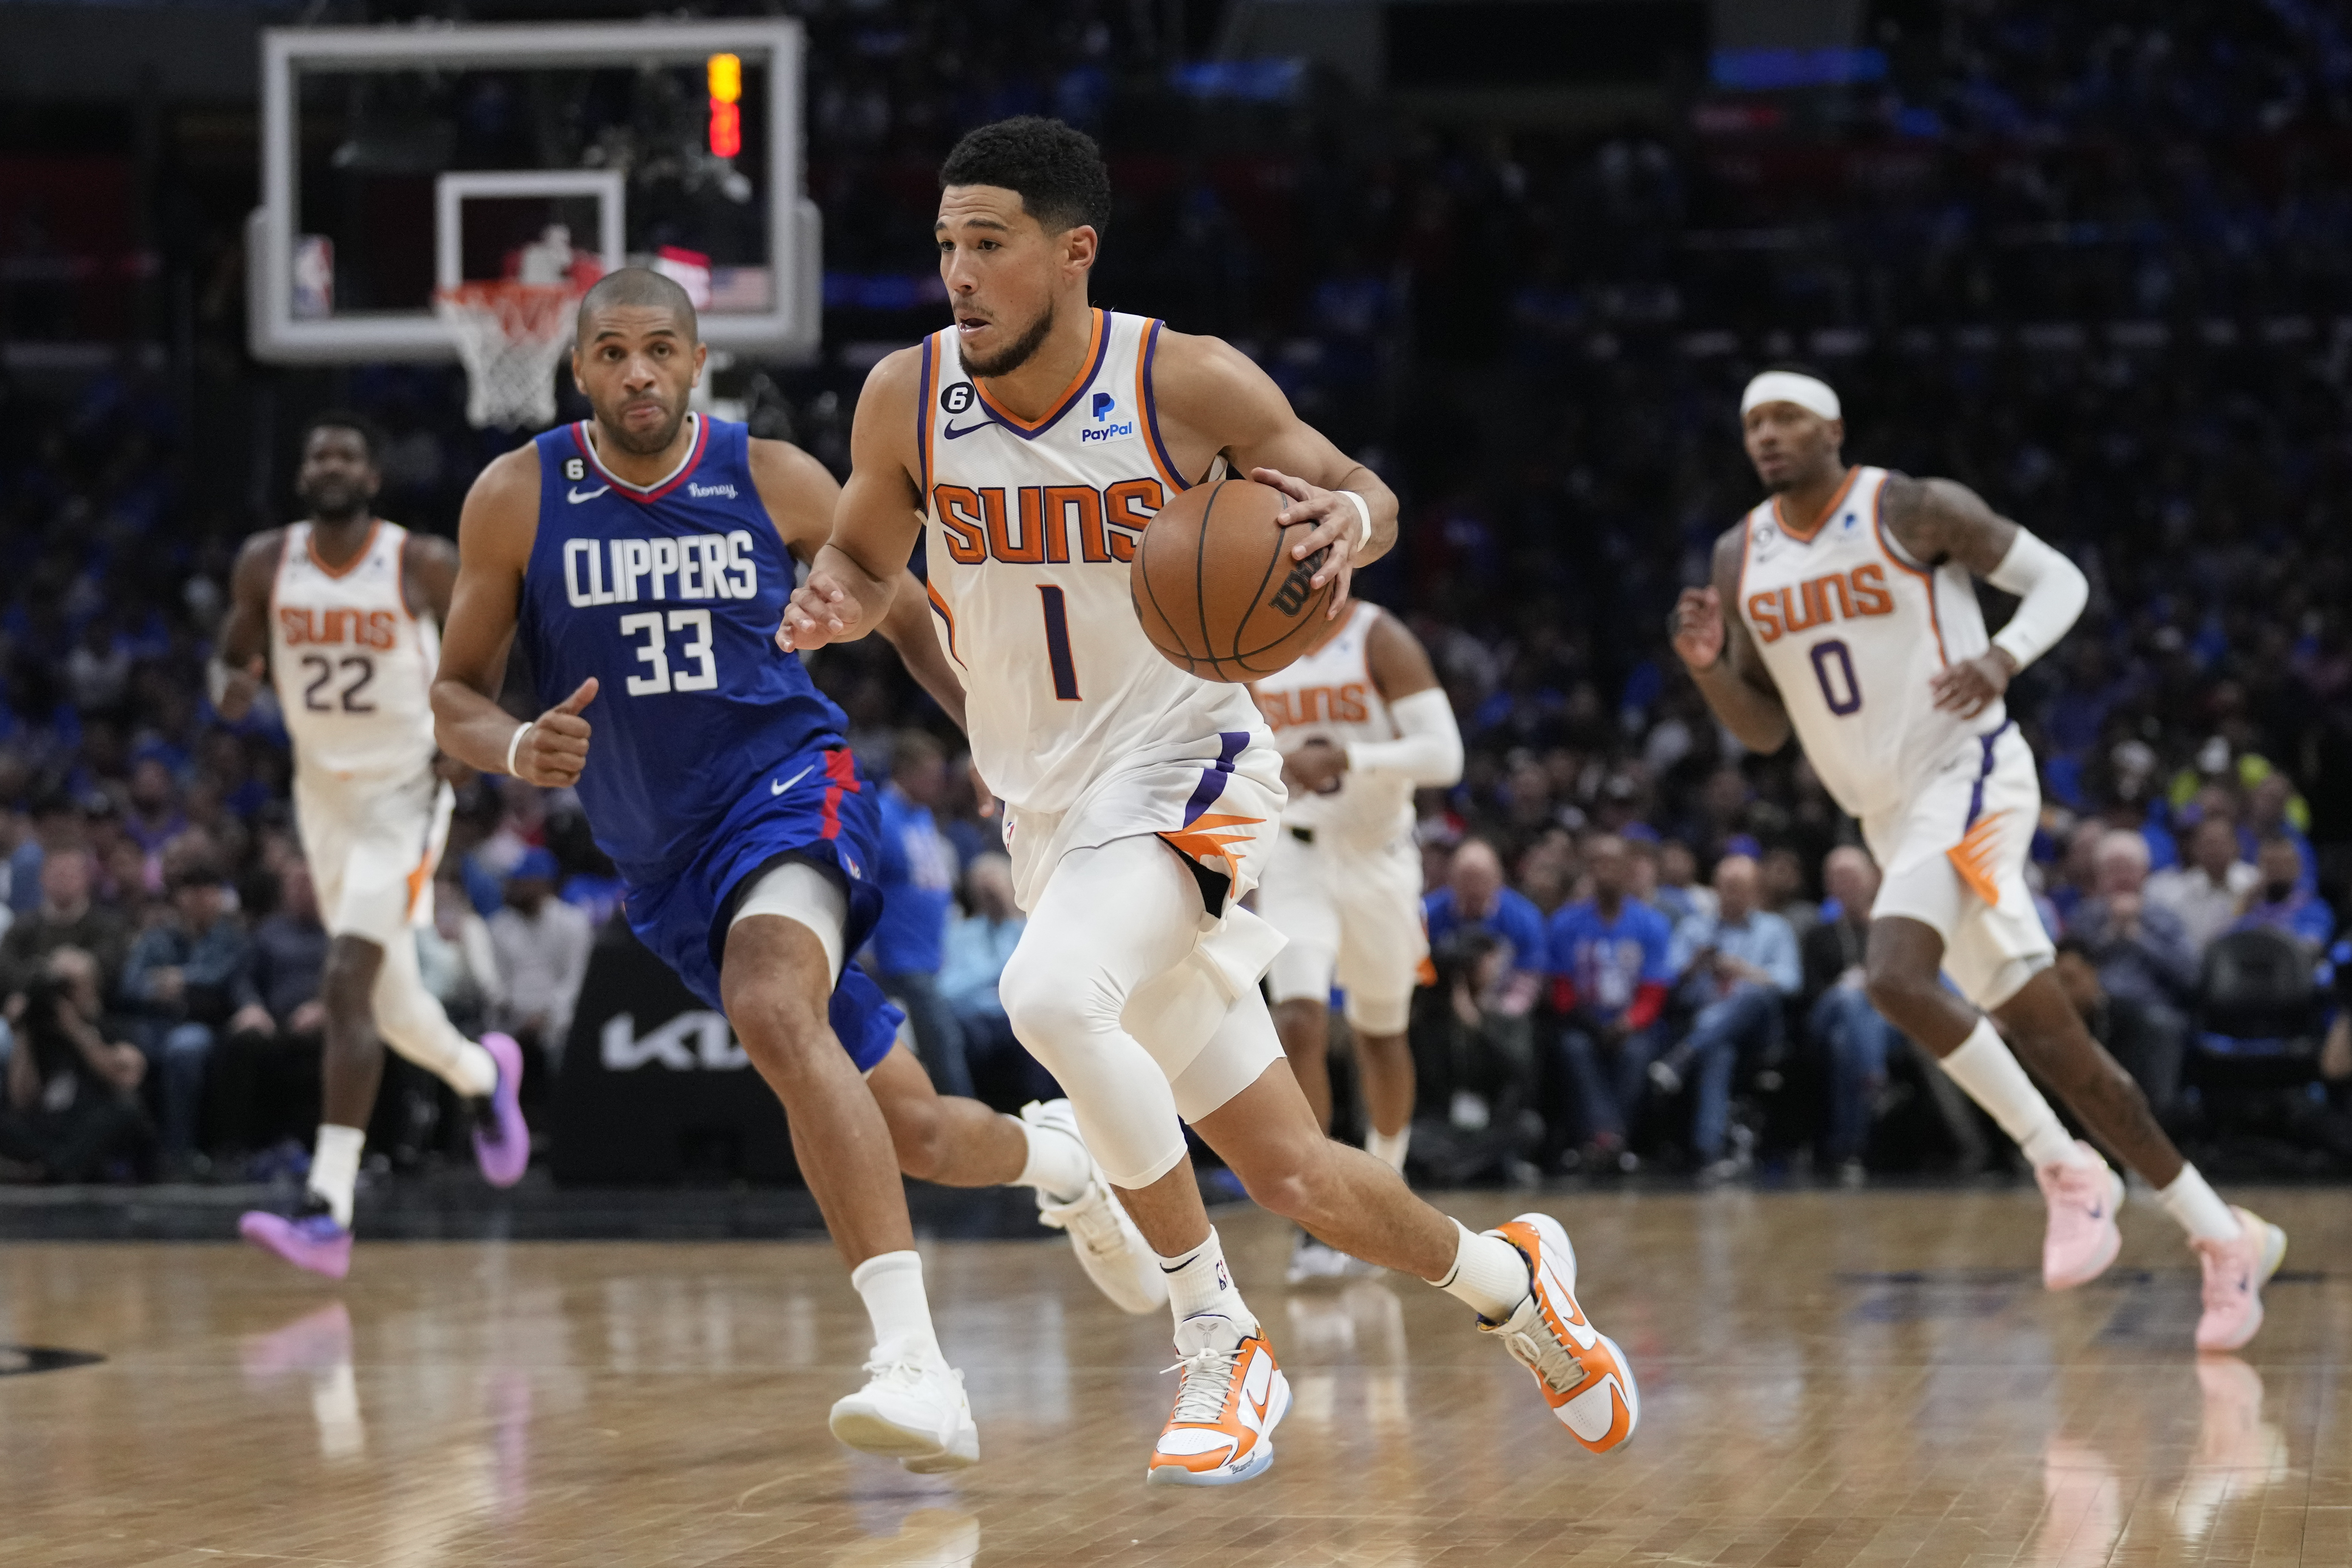 Chris Paul's shot vs. Clippers earns Suns guard awes on social media